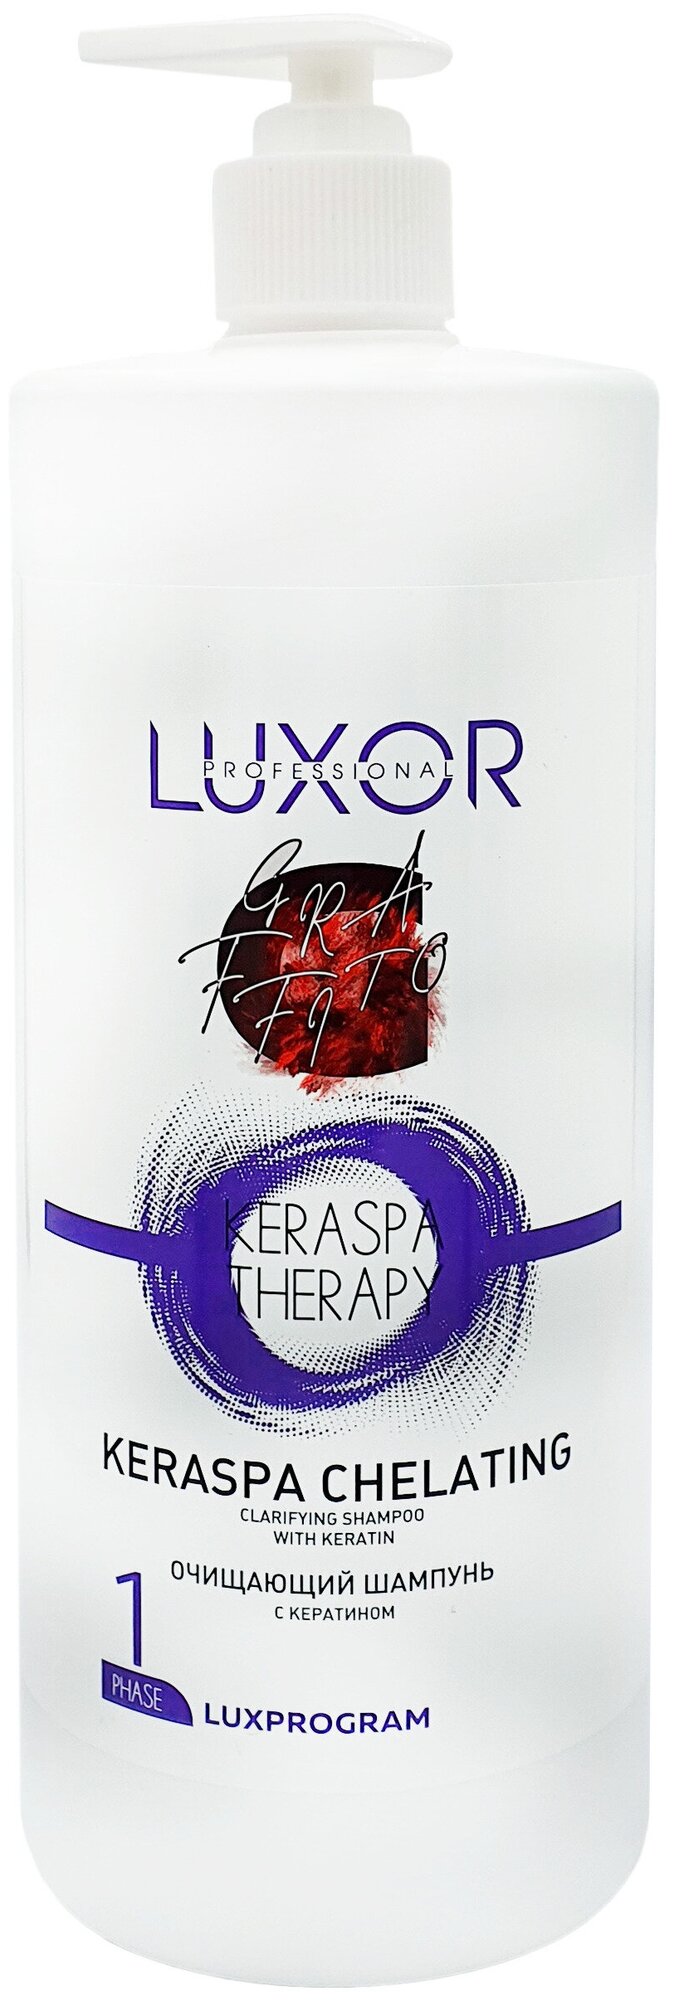 Luxor Professional. Очищающий шампунь с кератином. KeraSpa. Фаза 1. 1000 мл.